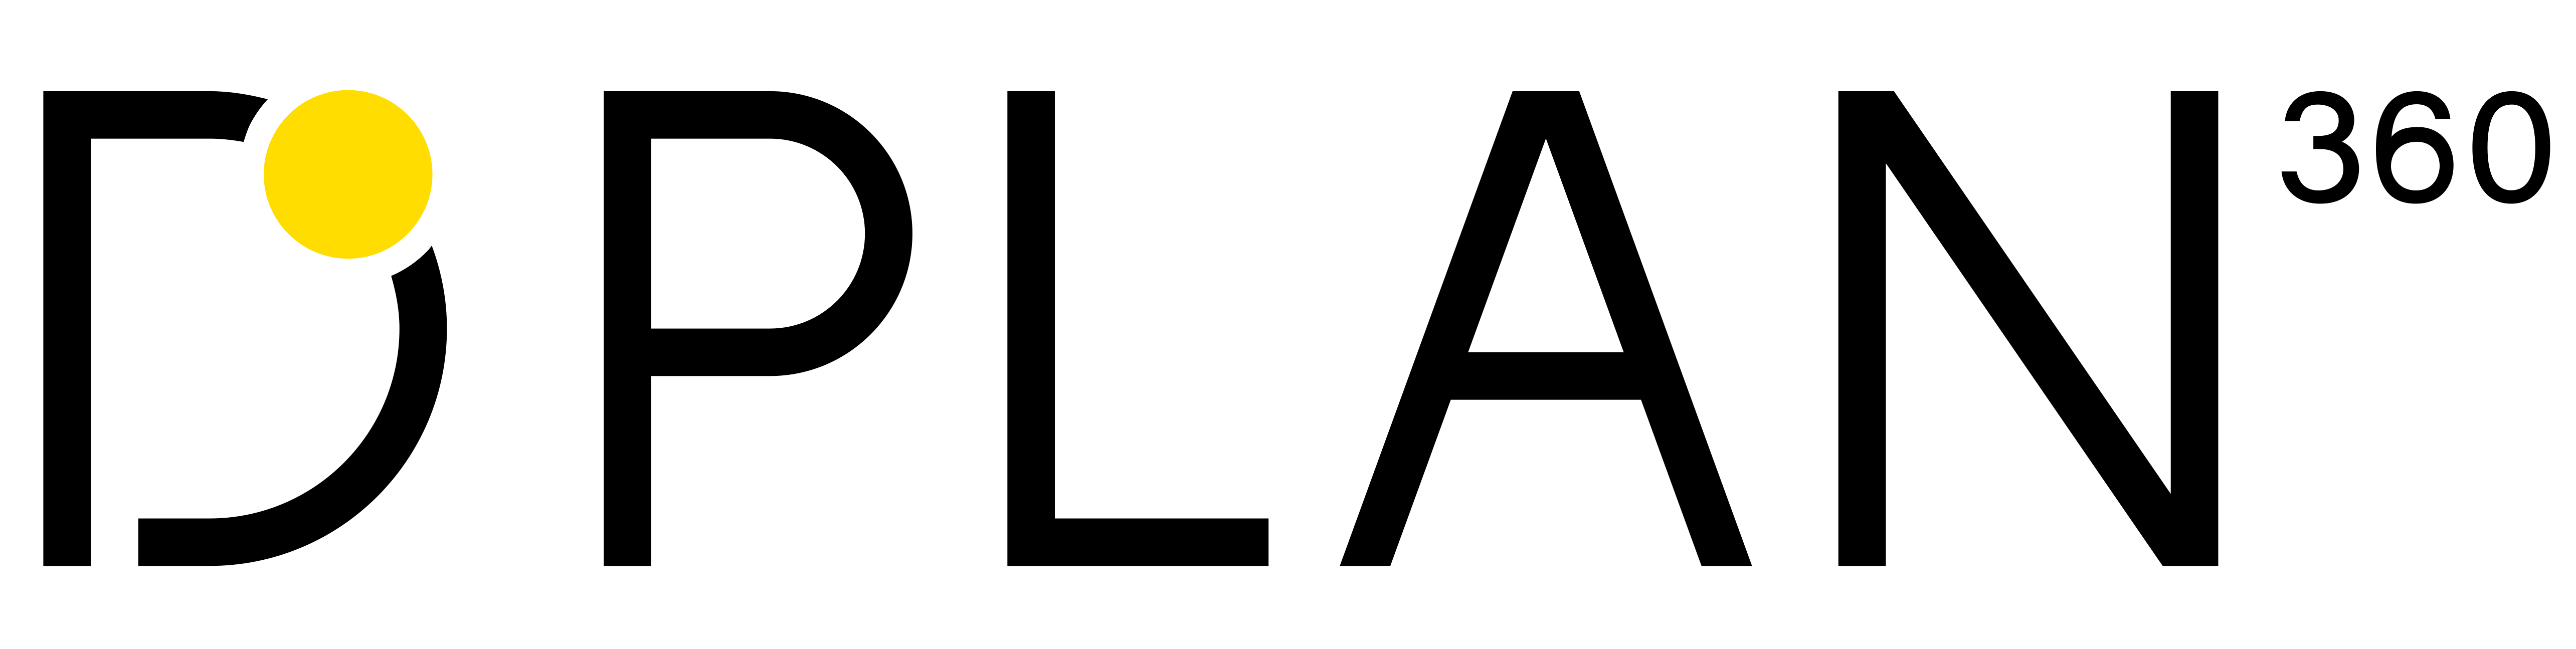 DPLAN logo